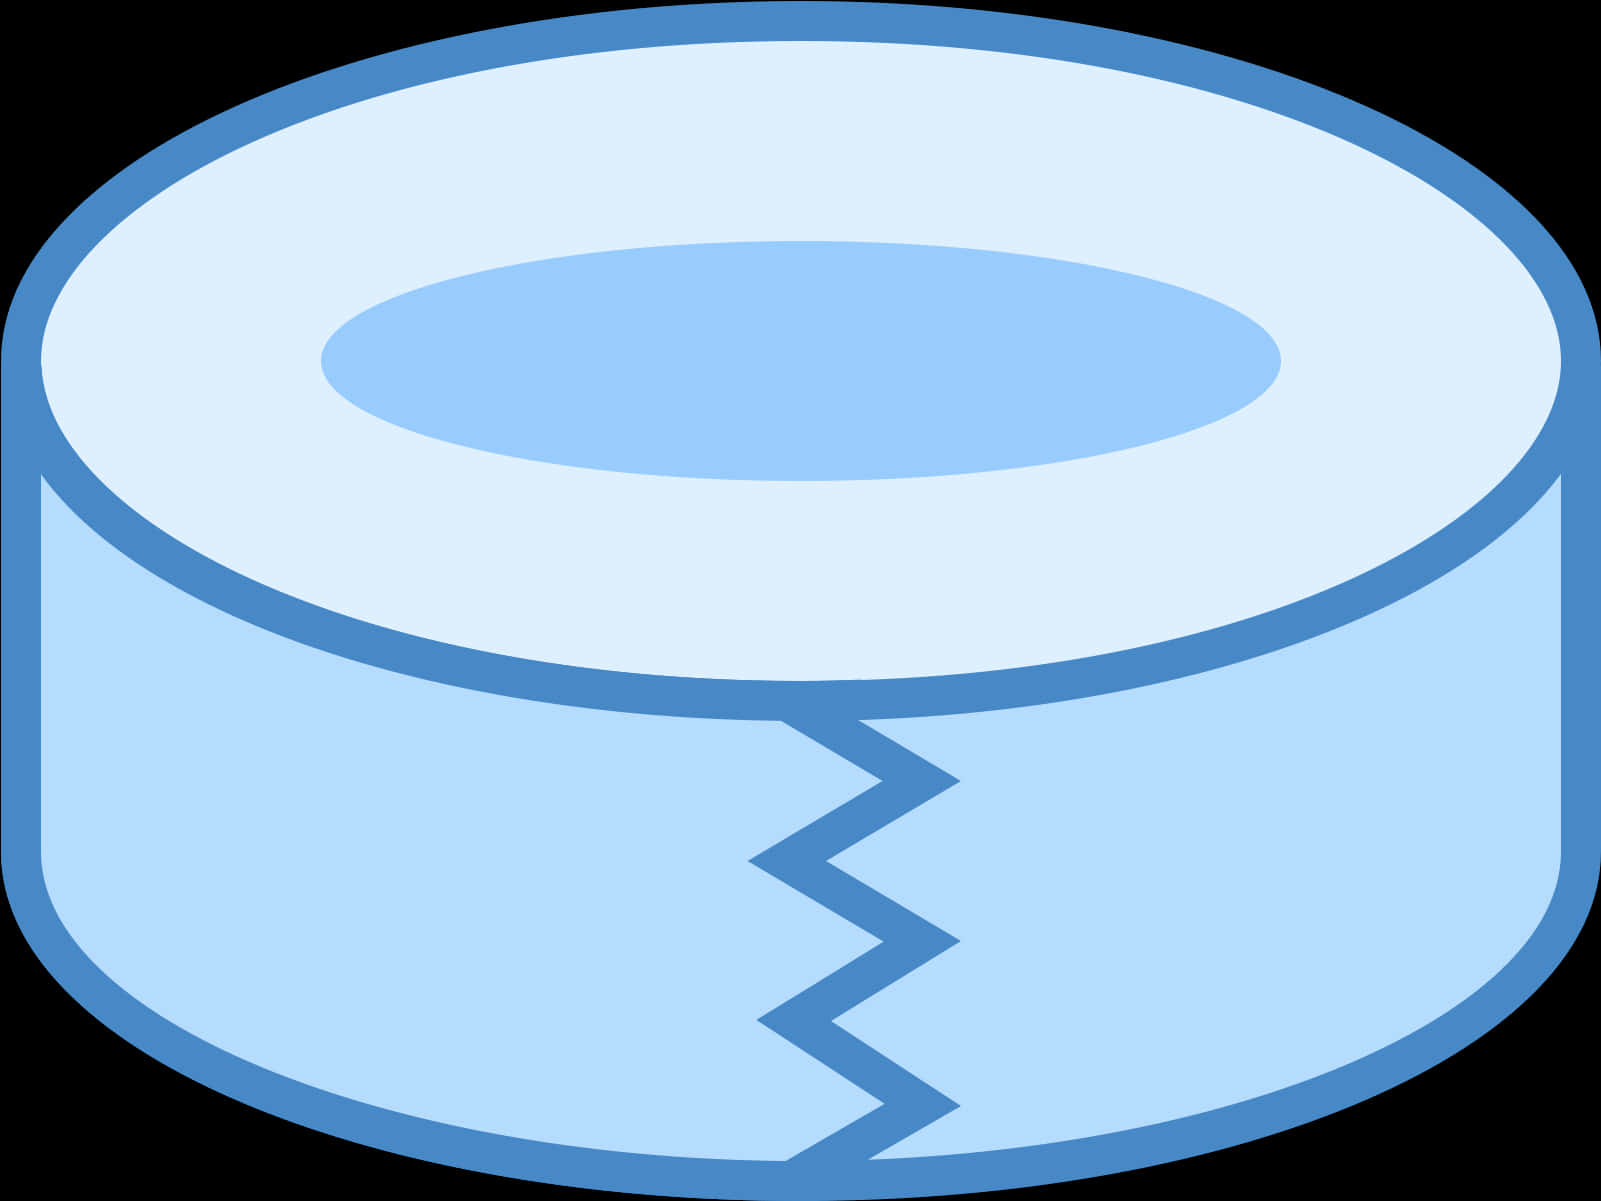 Blue Circular Object Illustration PNG